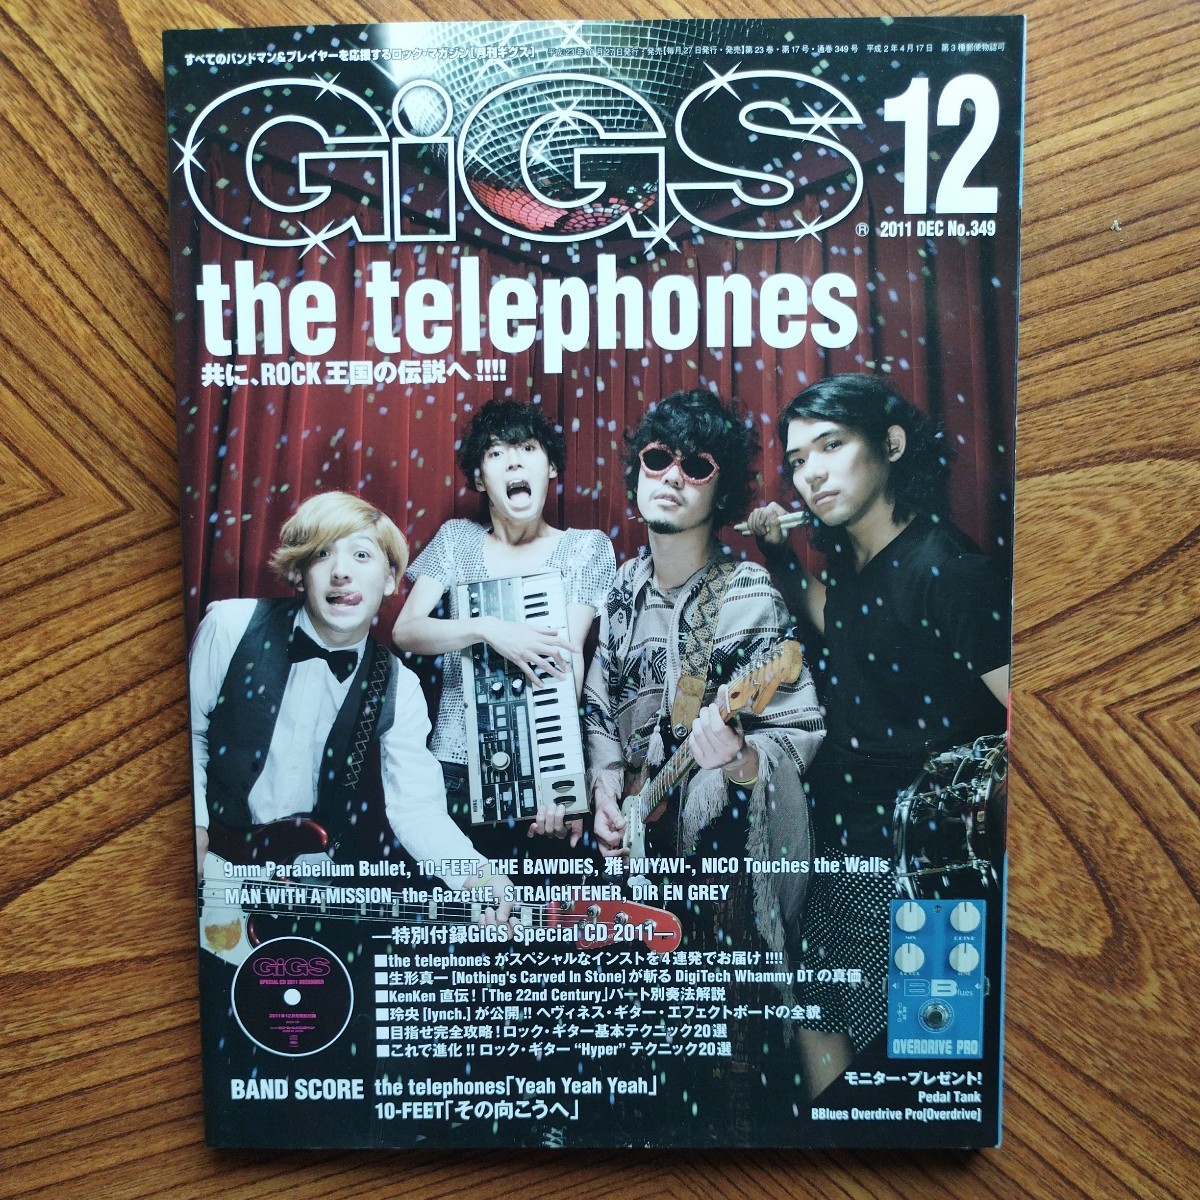 GiGS2011.12 No.349 CD есть the telephones/9mm Parabelltm Bullet/10-FEET/THE BAWDIES/.